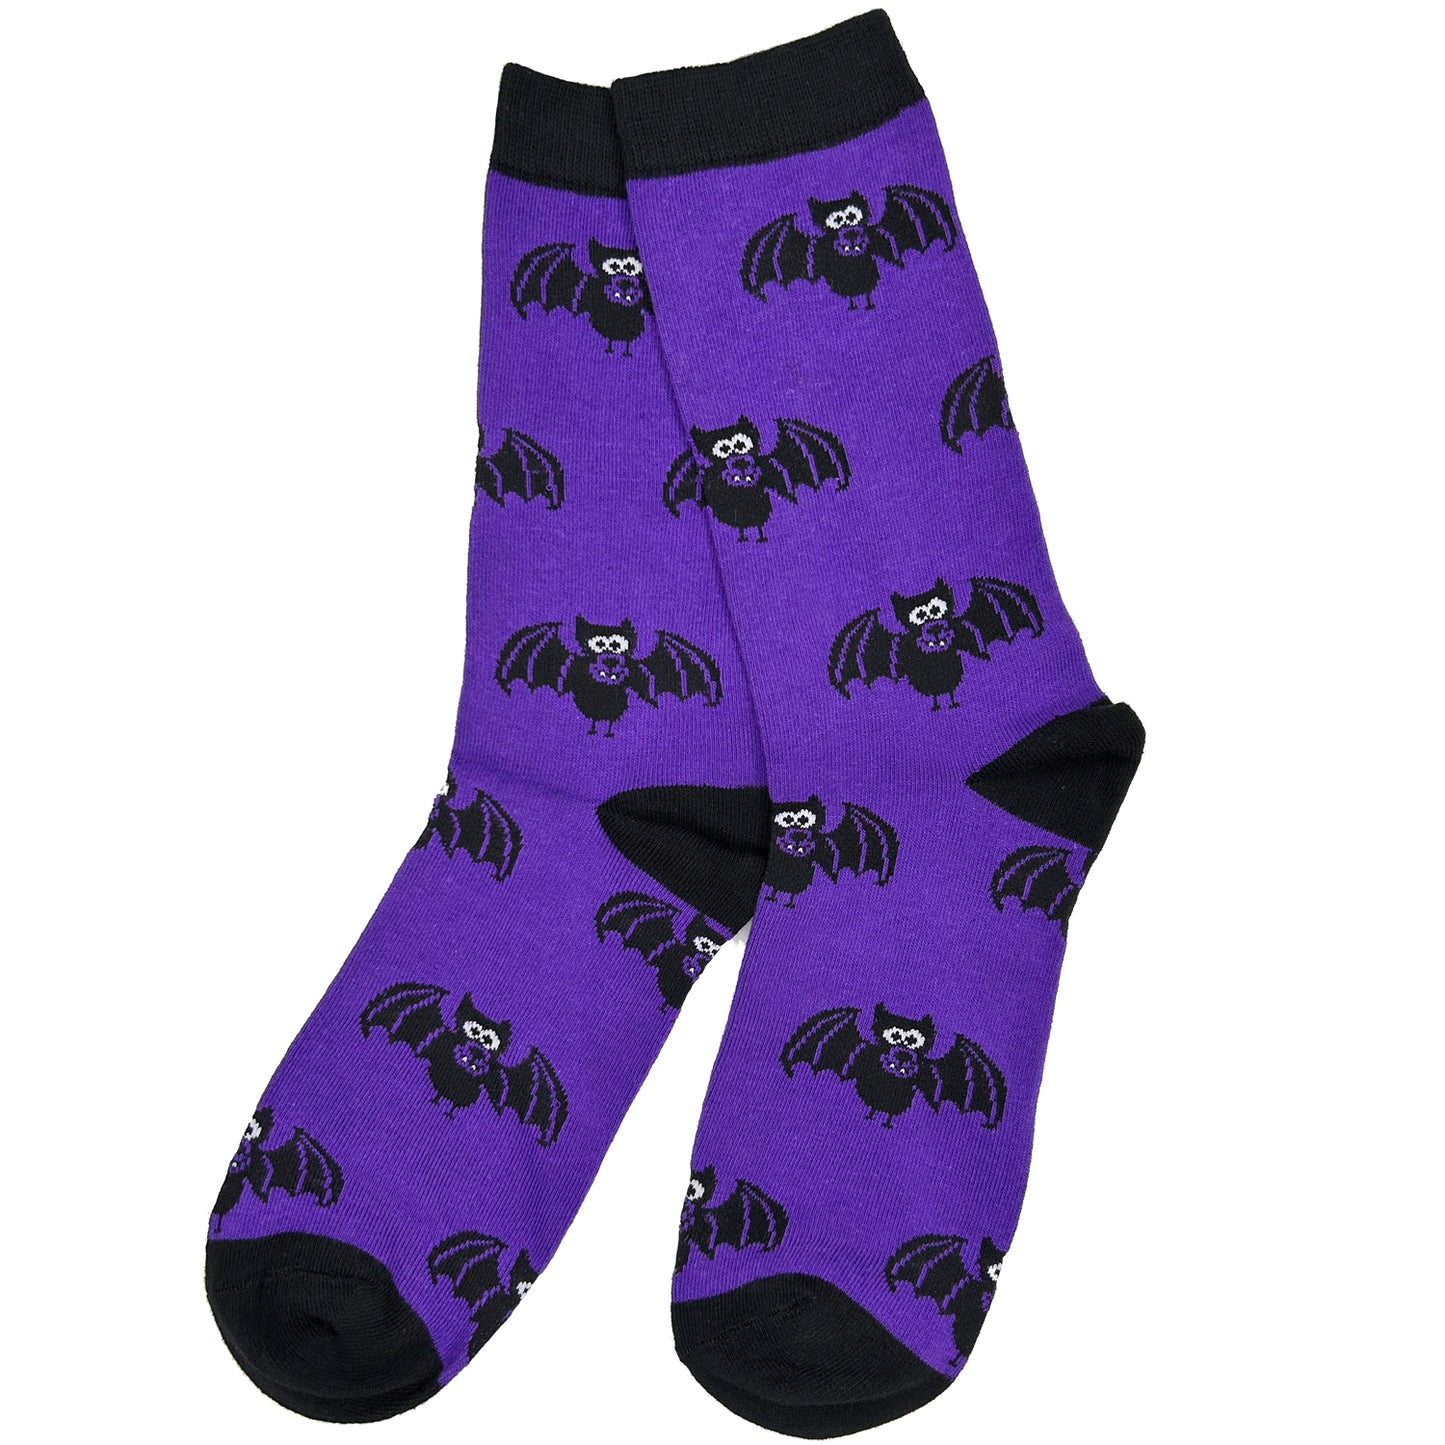 GMT "Vampire Bat" Socks